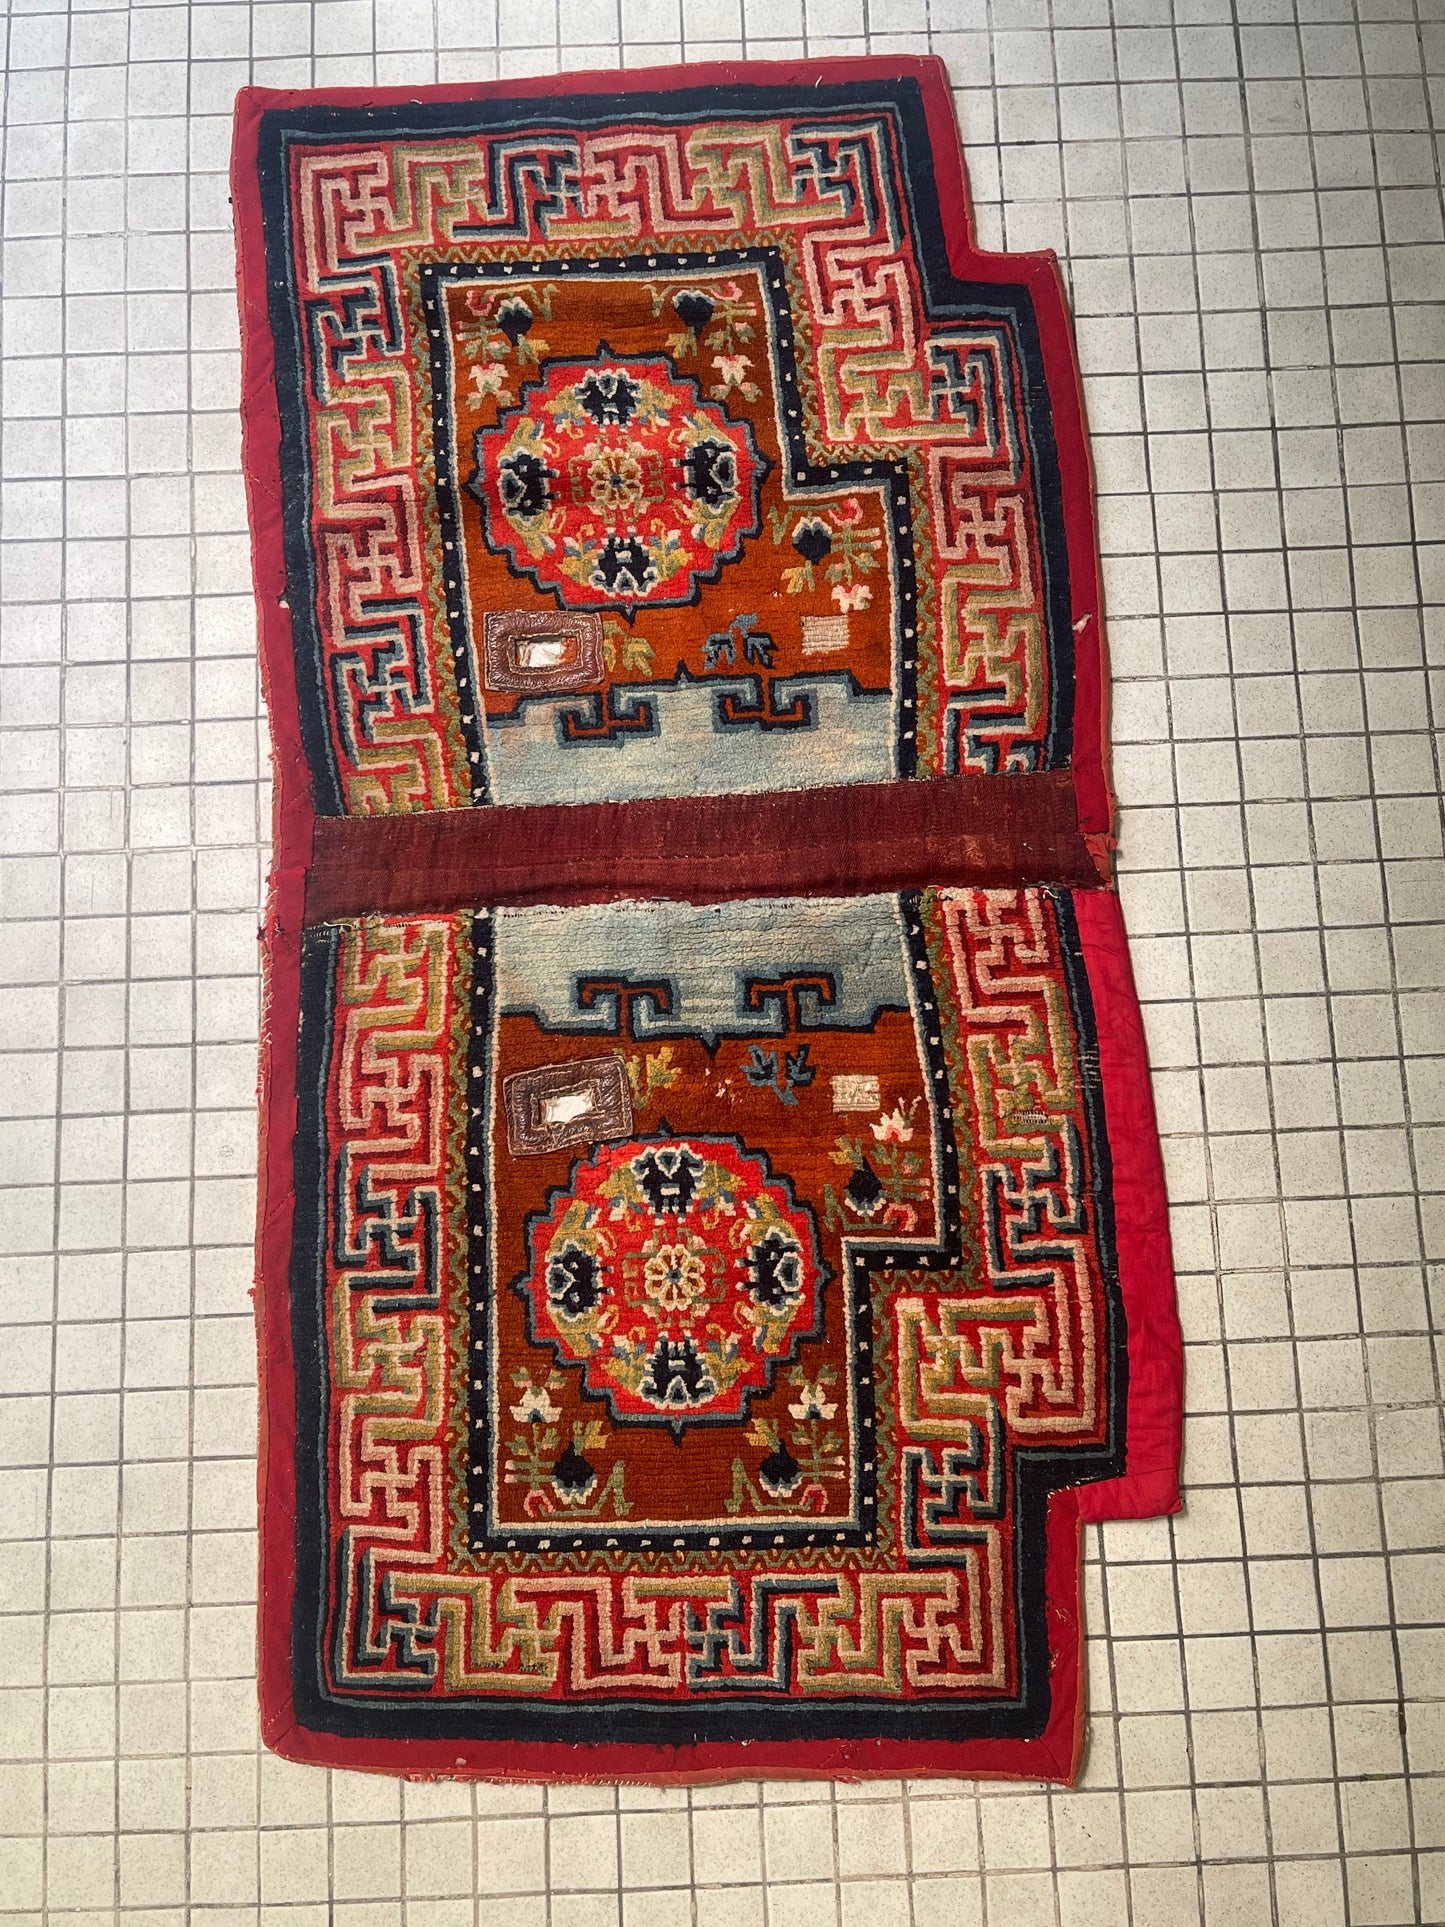 An antique Tibetan saddle rug